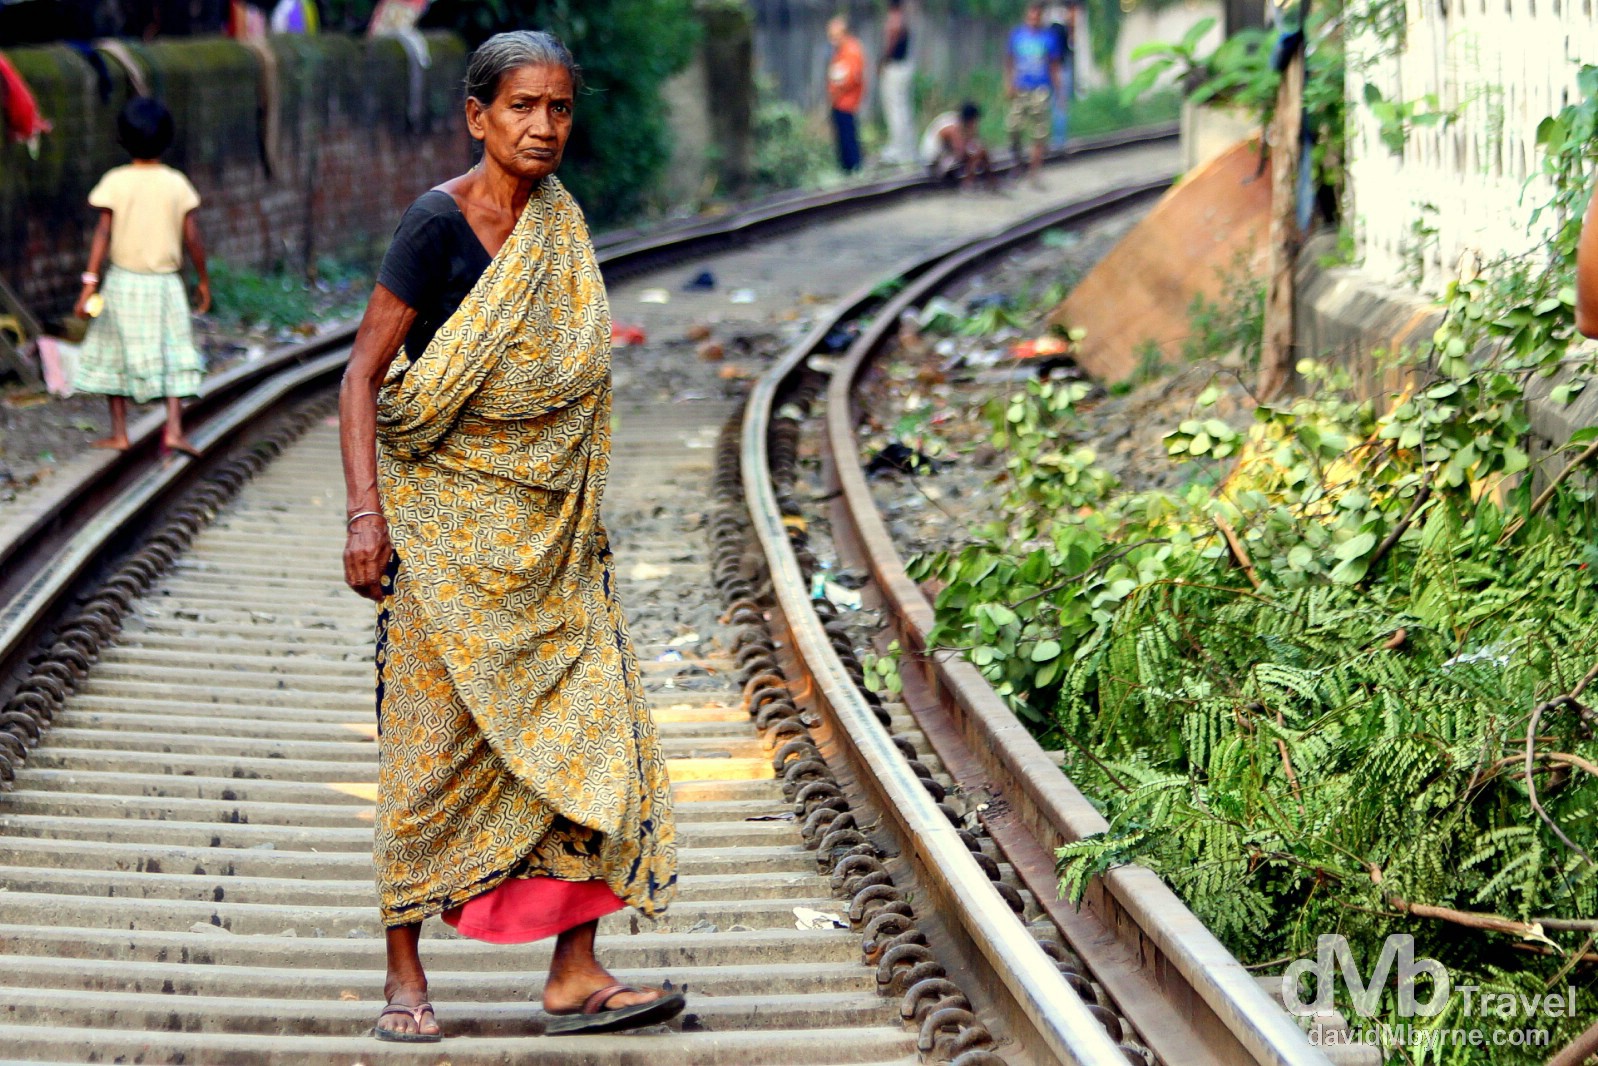 Crossing the train tracks near the Babu Ghat in Kolkata (Calcutta), West Bengal, India. October 15th 2012.